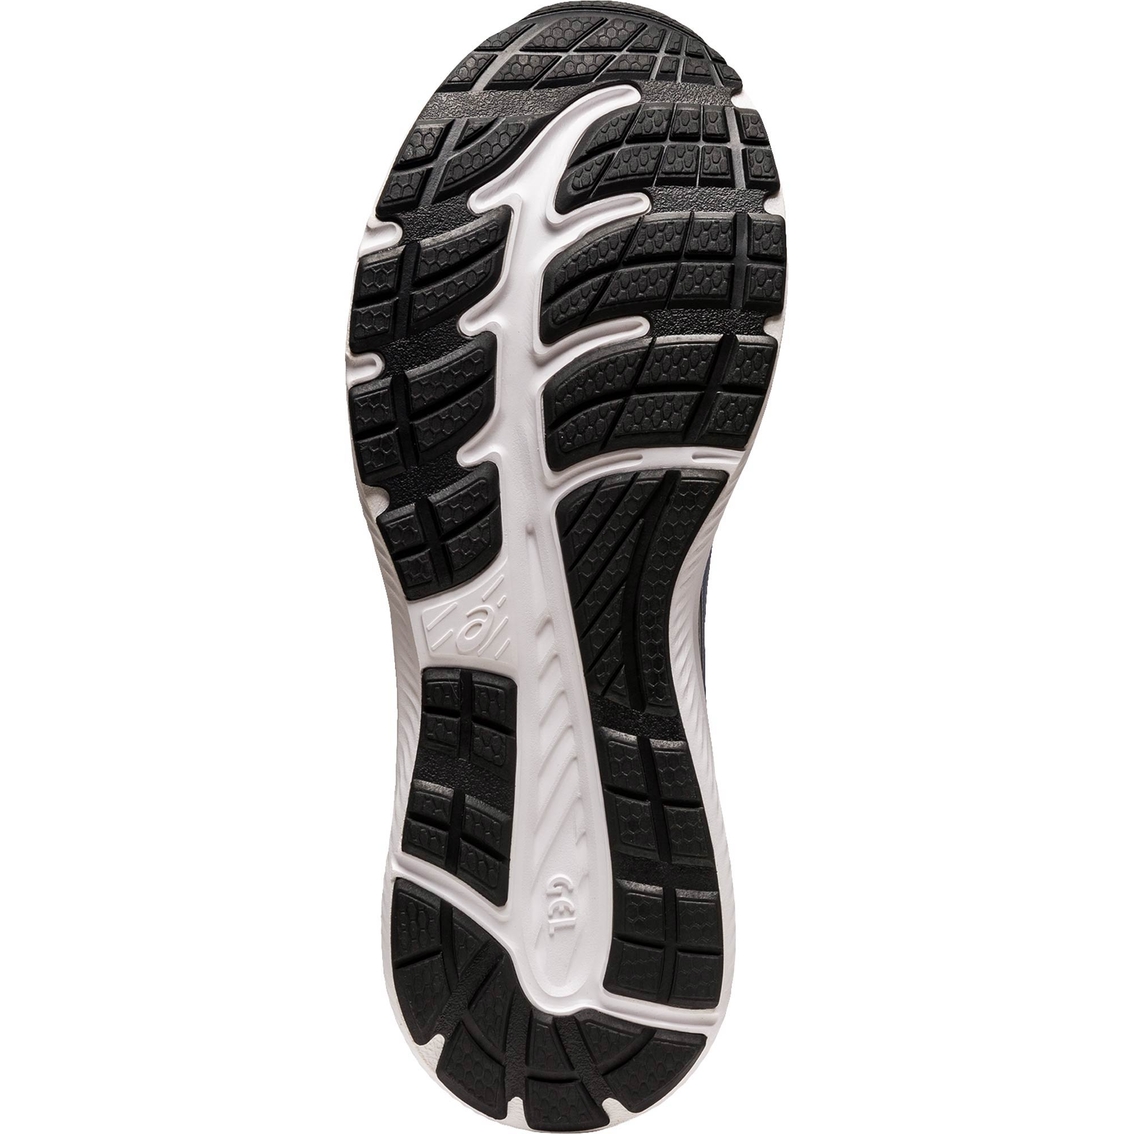 ASICS Men's Gel Contend 8 Running Shoes - Image 7 of 7